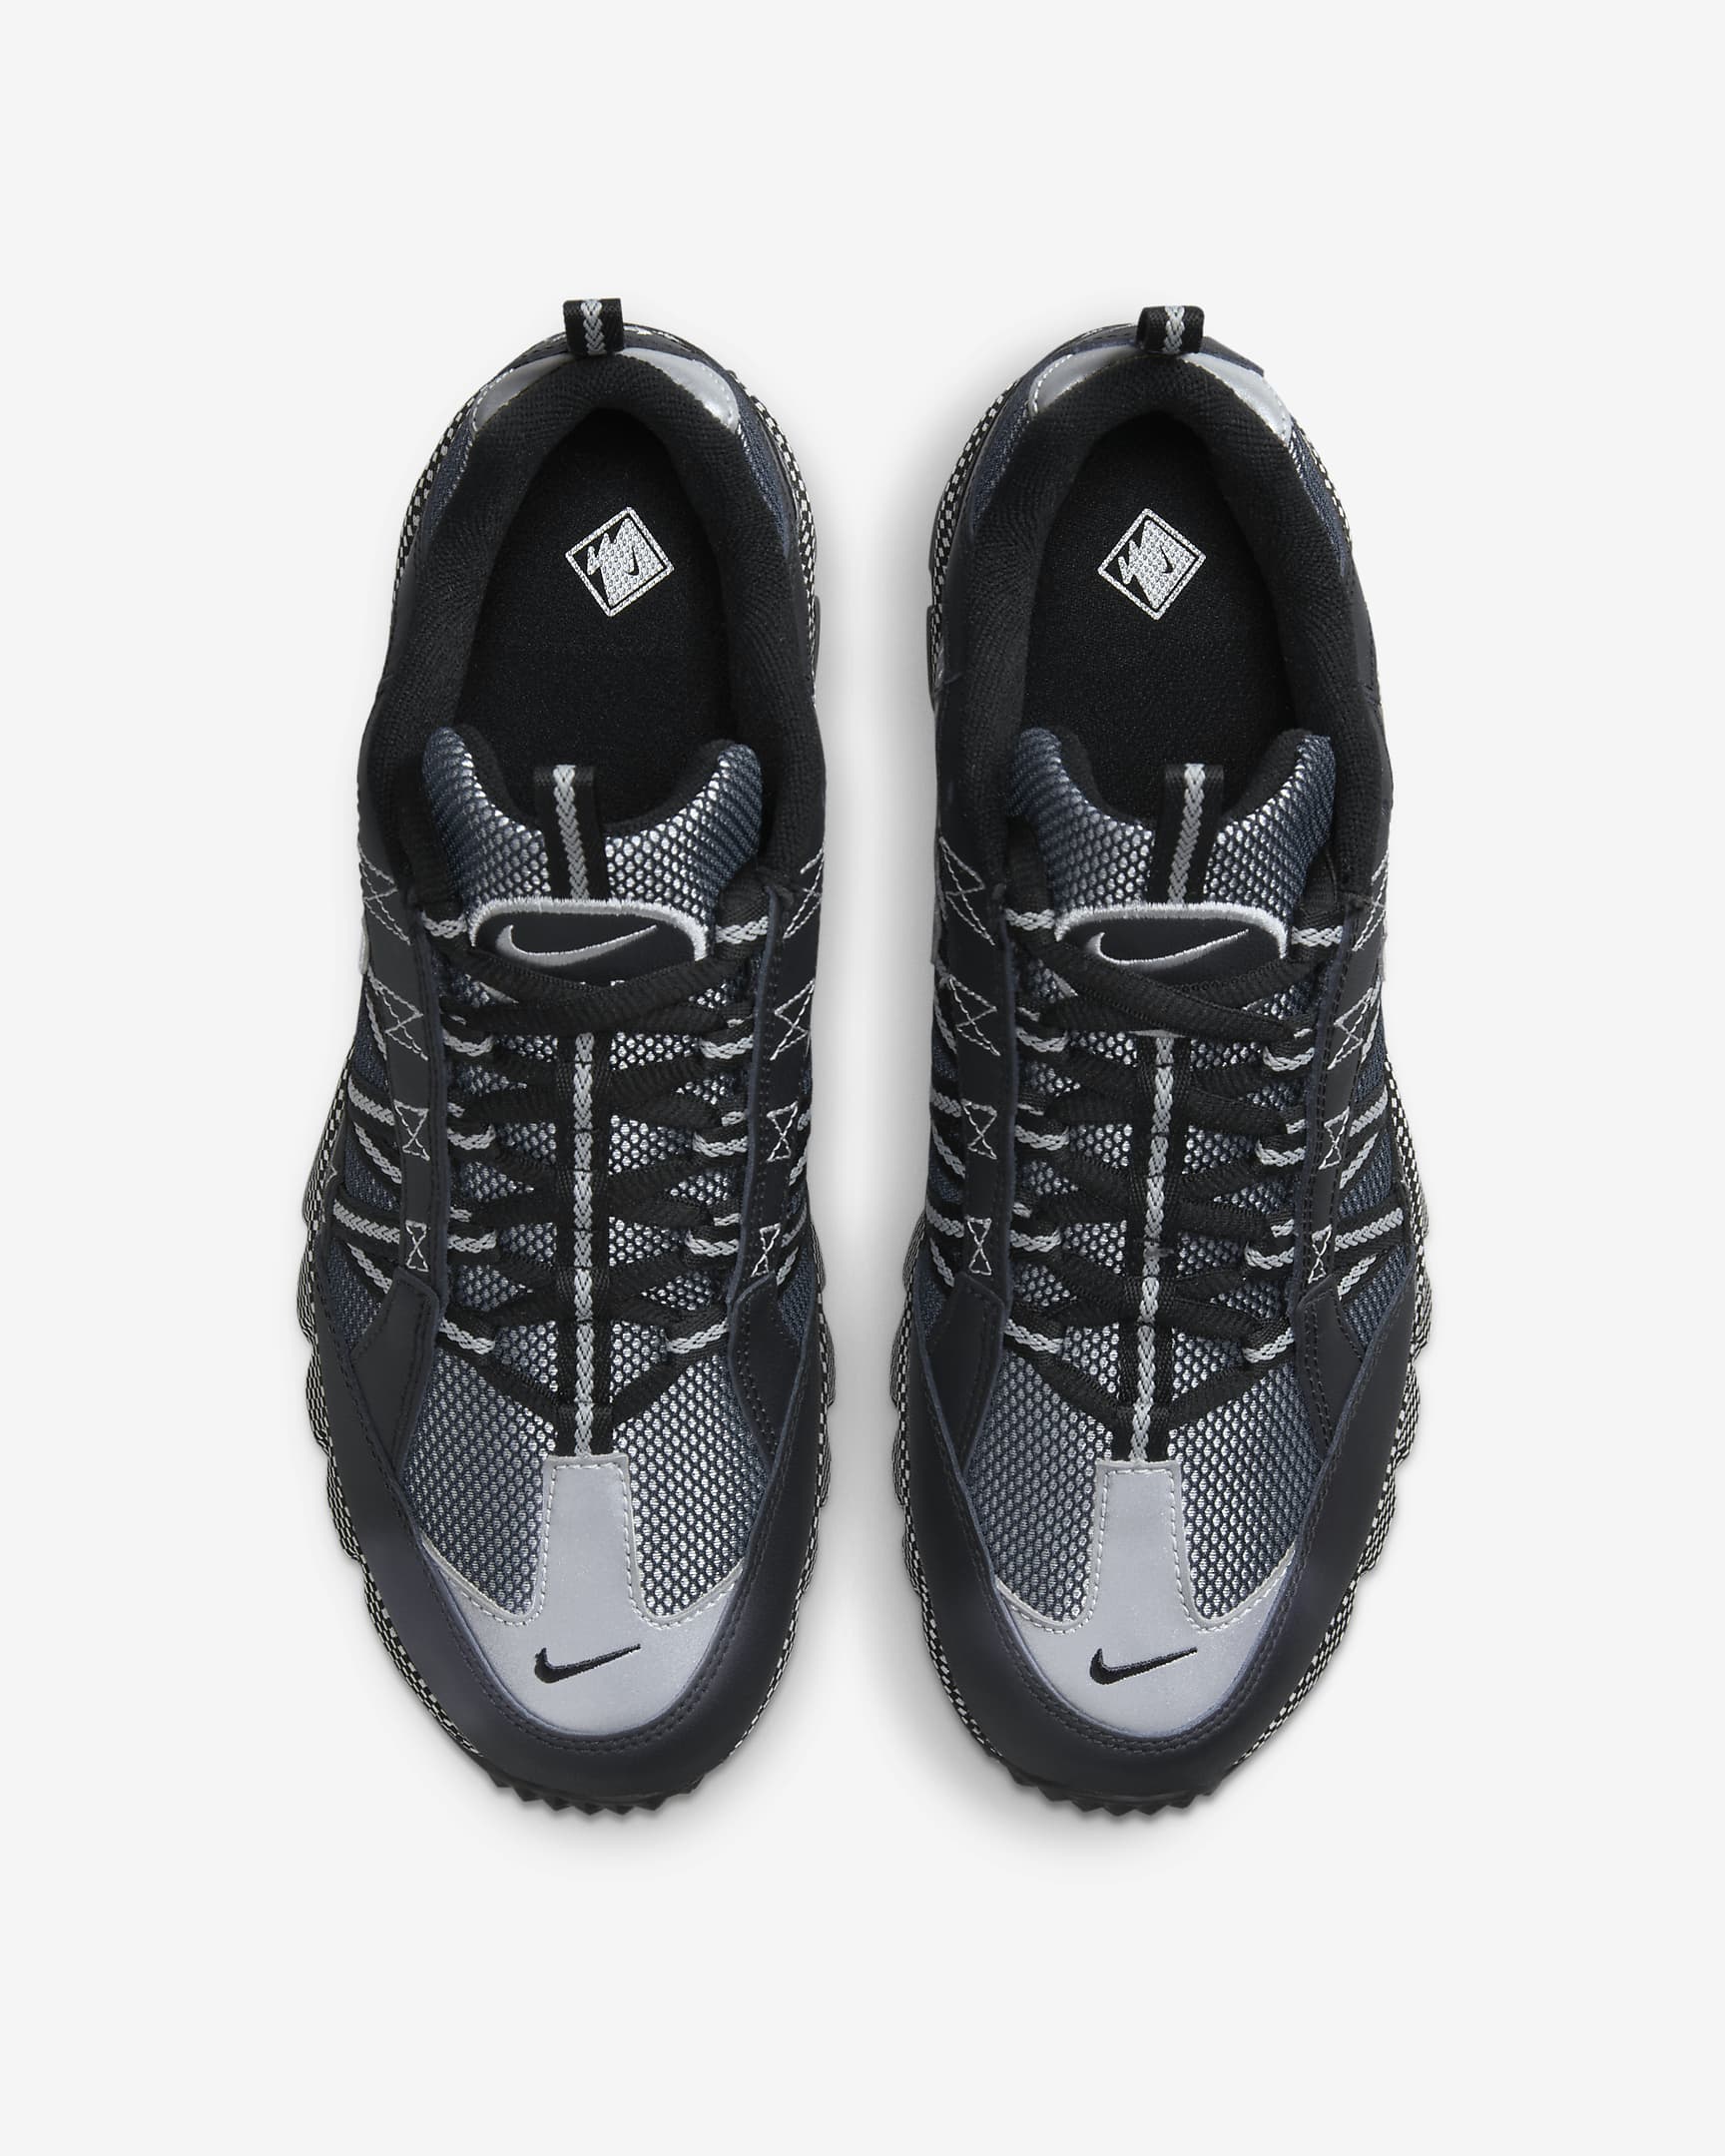 Nike Air Humara Men's Shoes - Black/Metallic Silver/Black/Metallic Silver